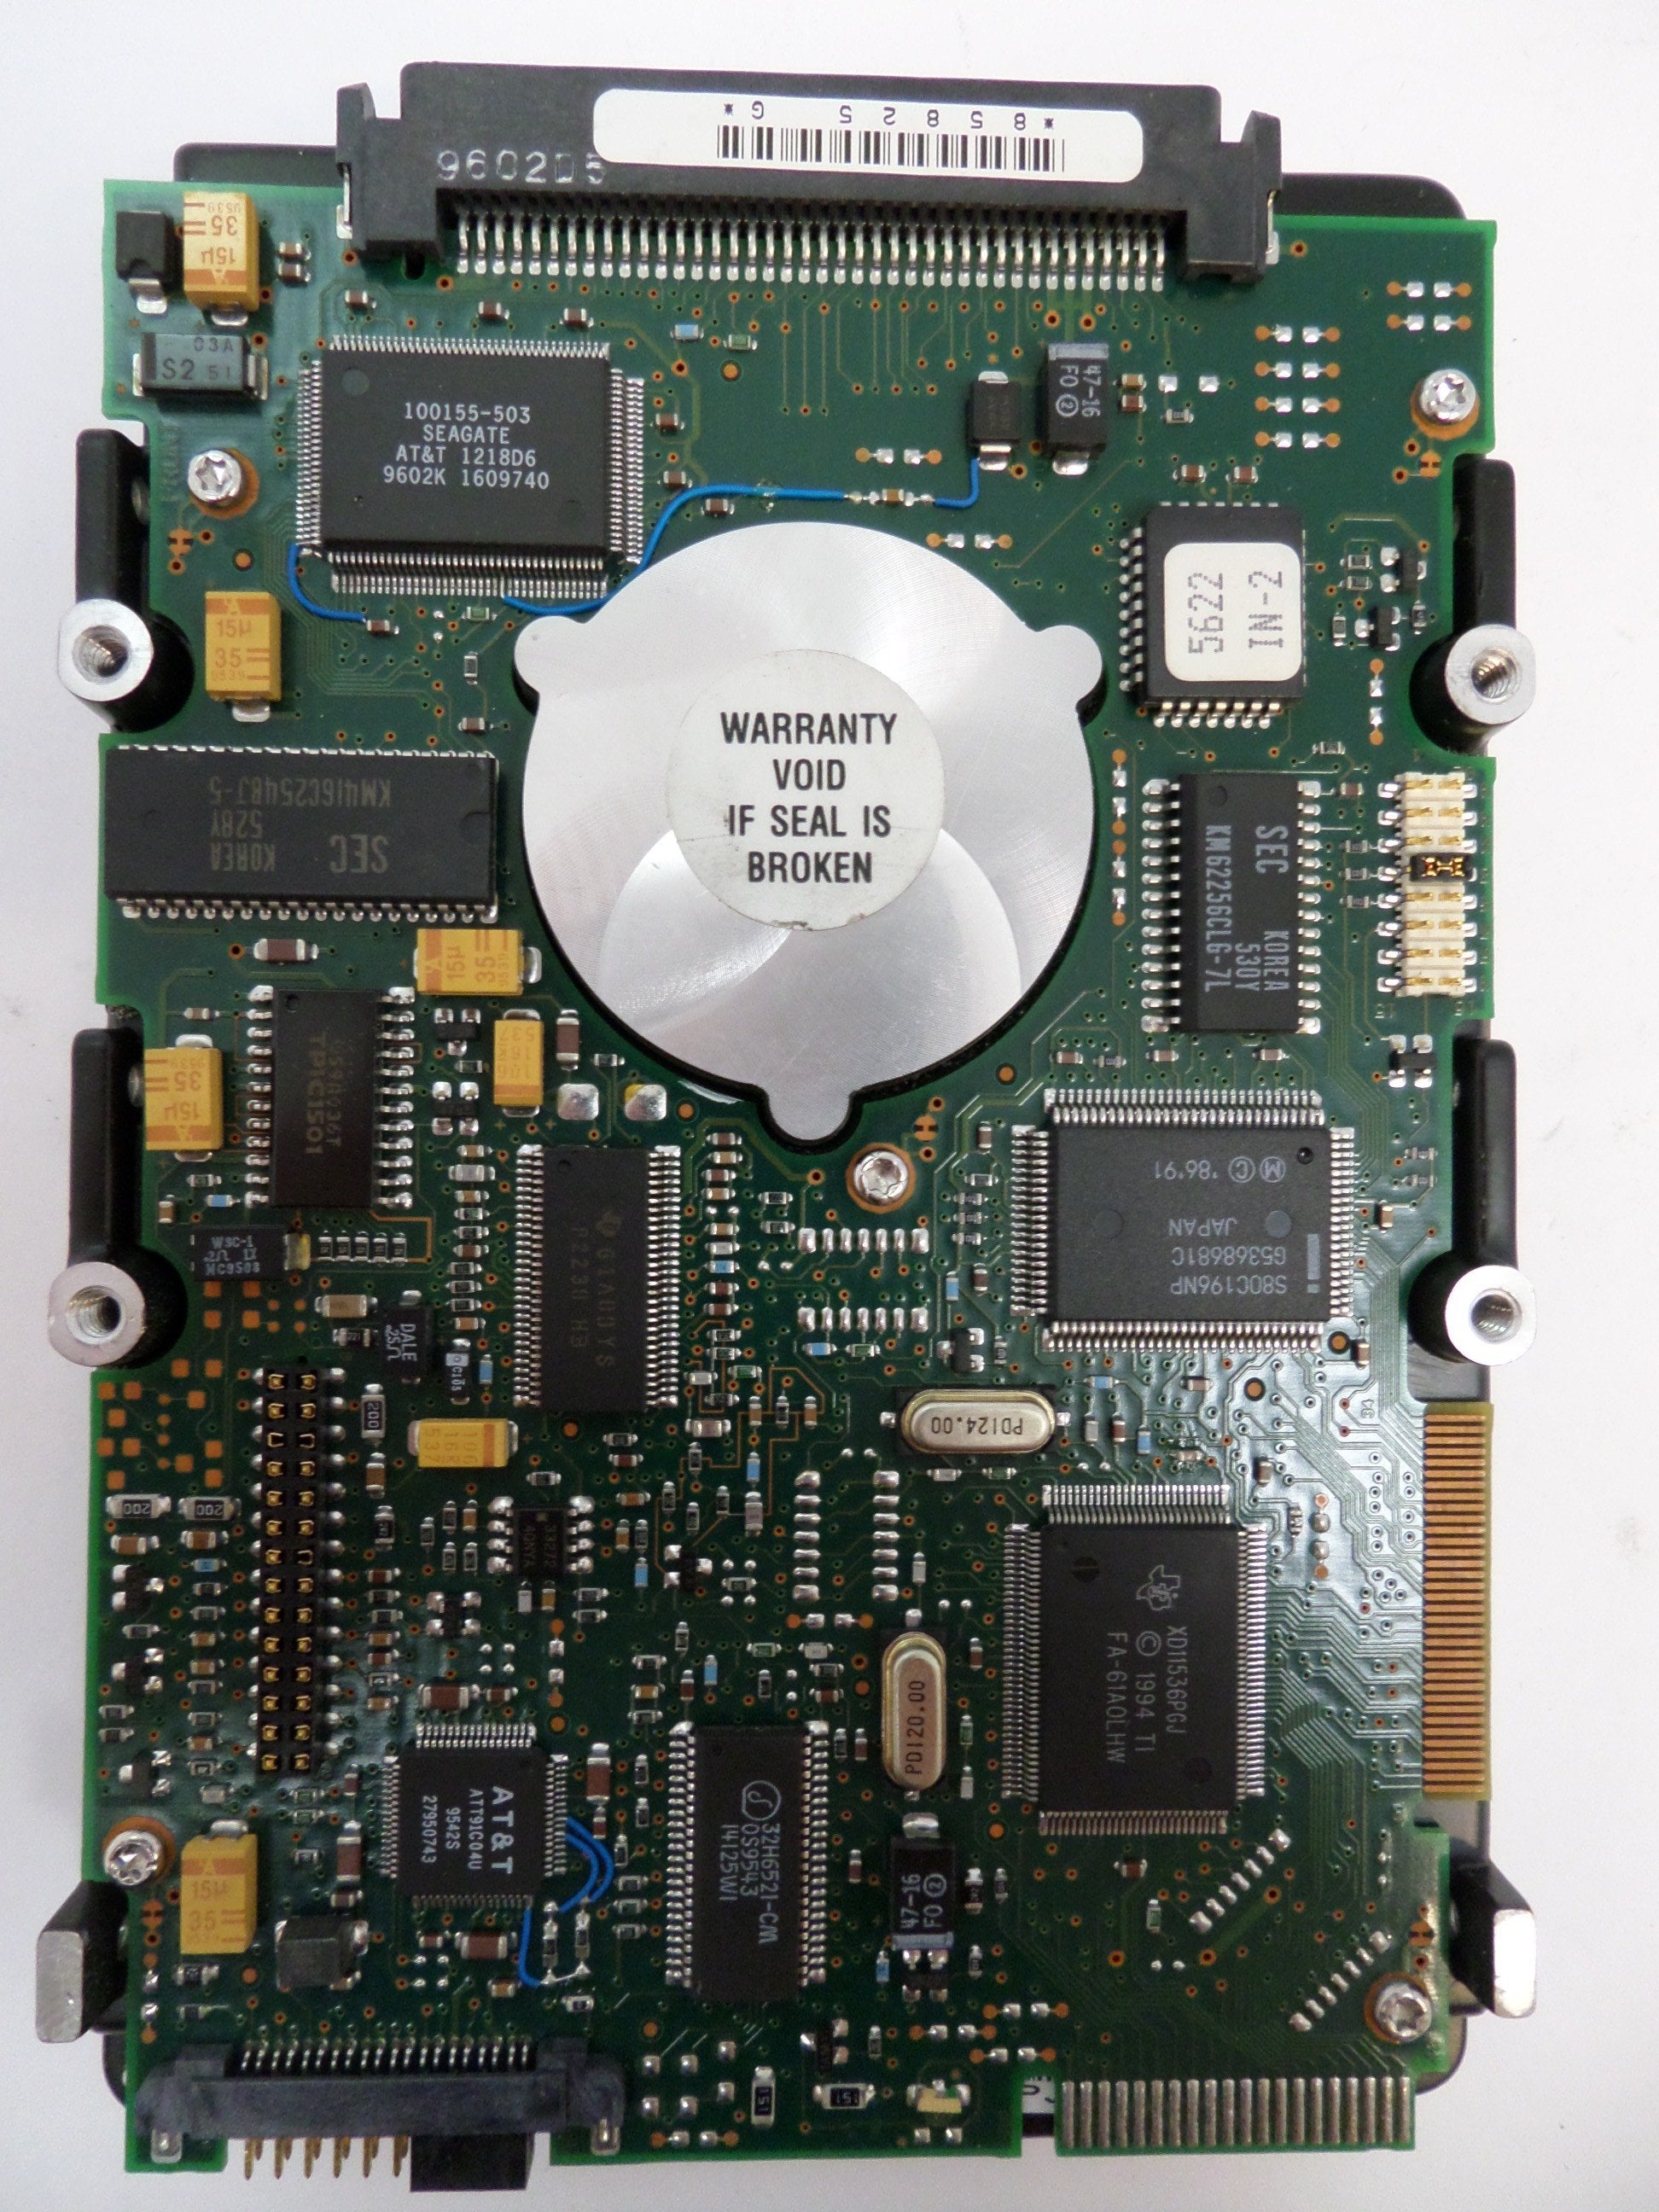 PR26073_9C4012-026_Seagate 1GB SCSI 80pin 5400rpm 3.5in HDD - Image5